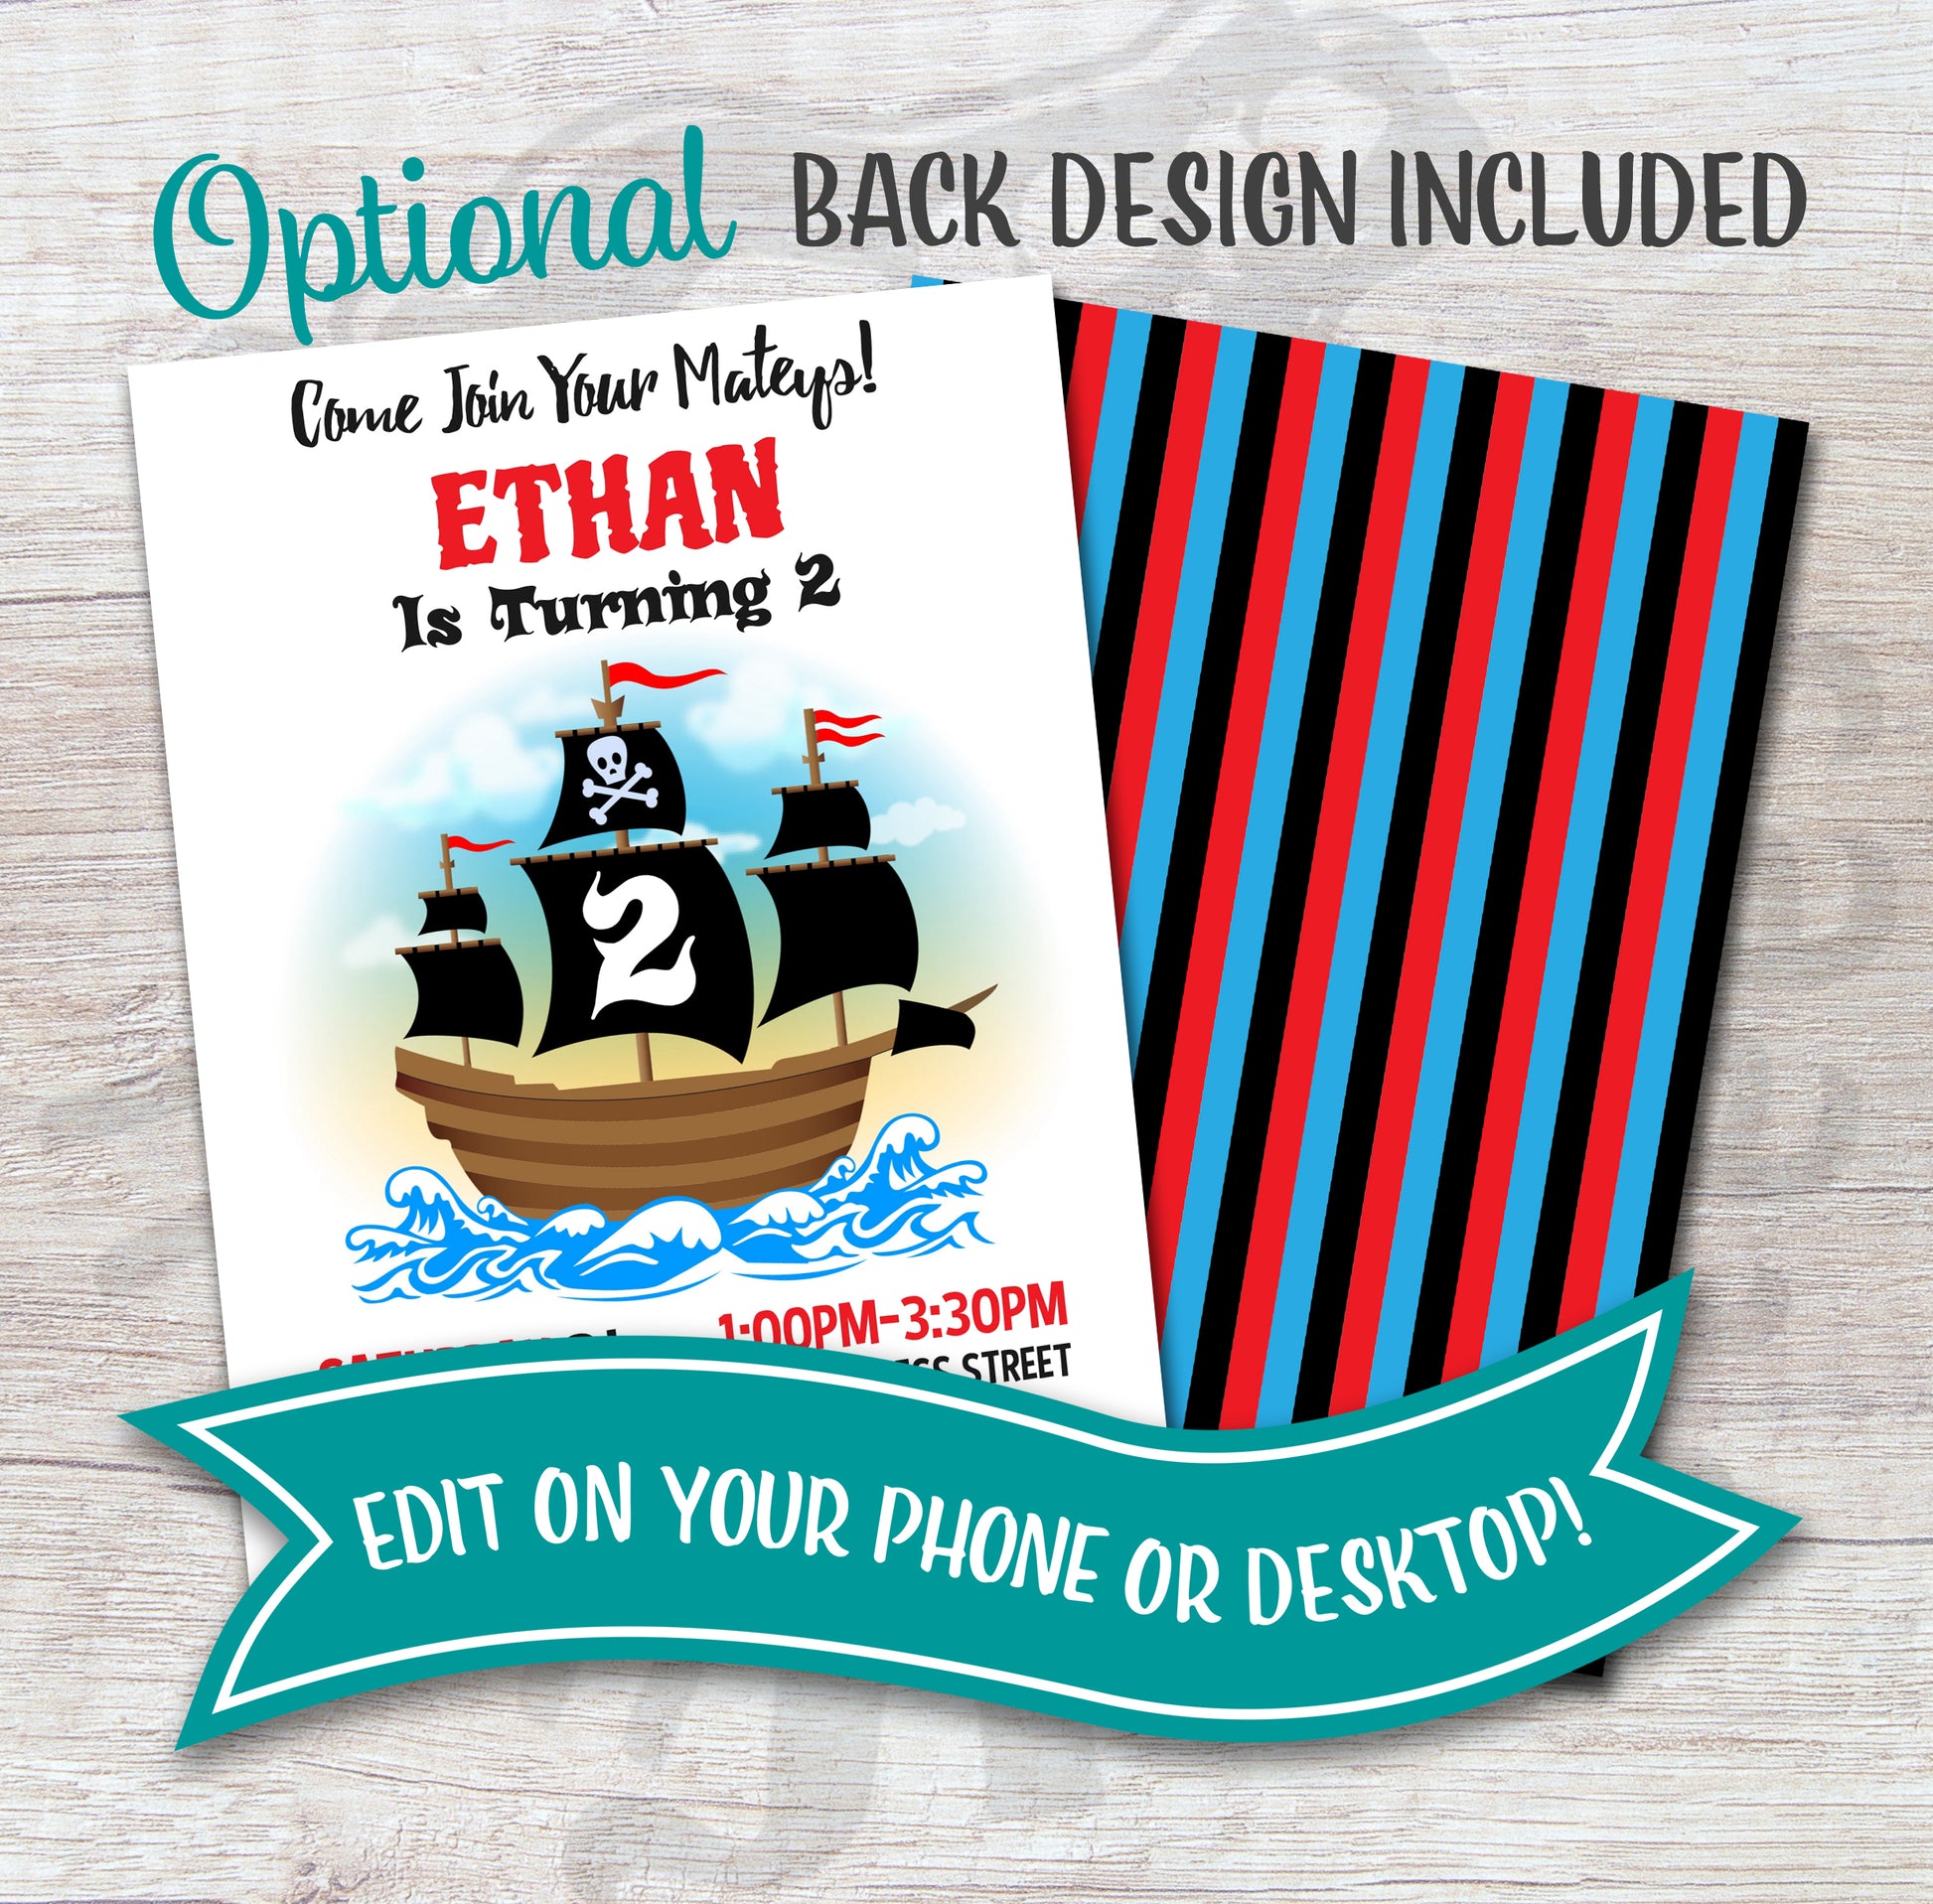 Pirate ship birthday invitation with back design